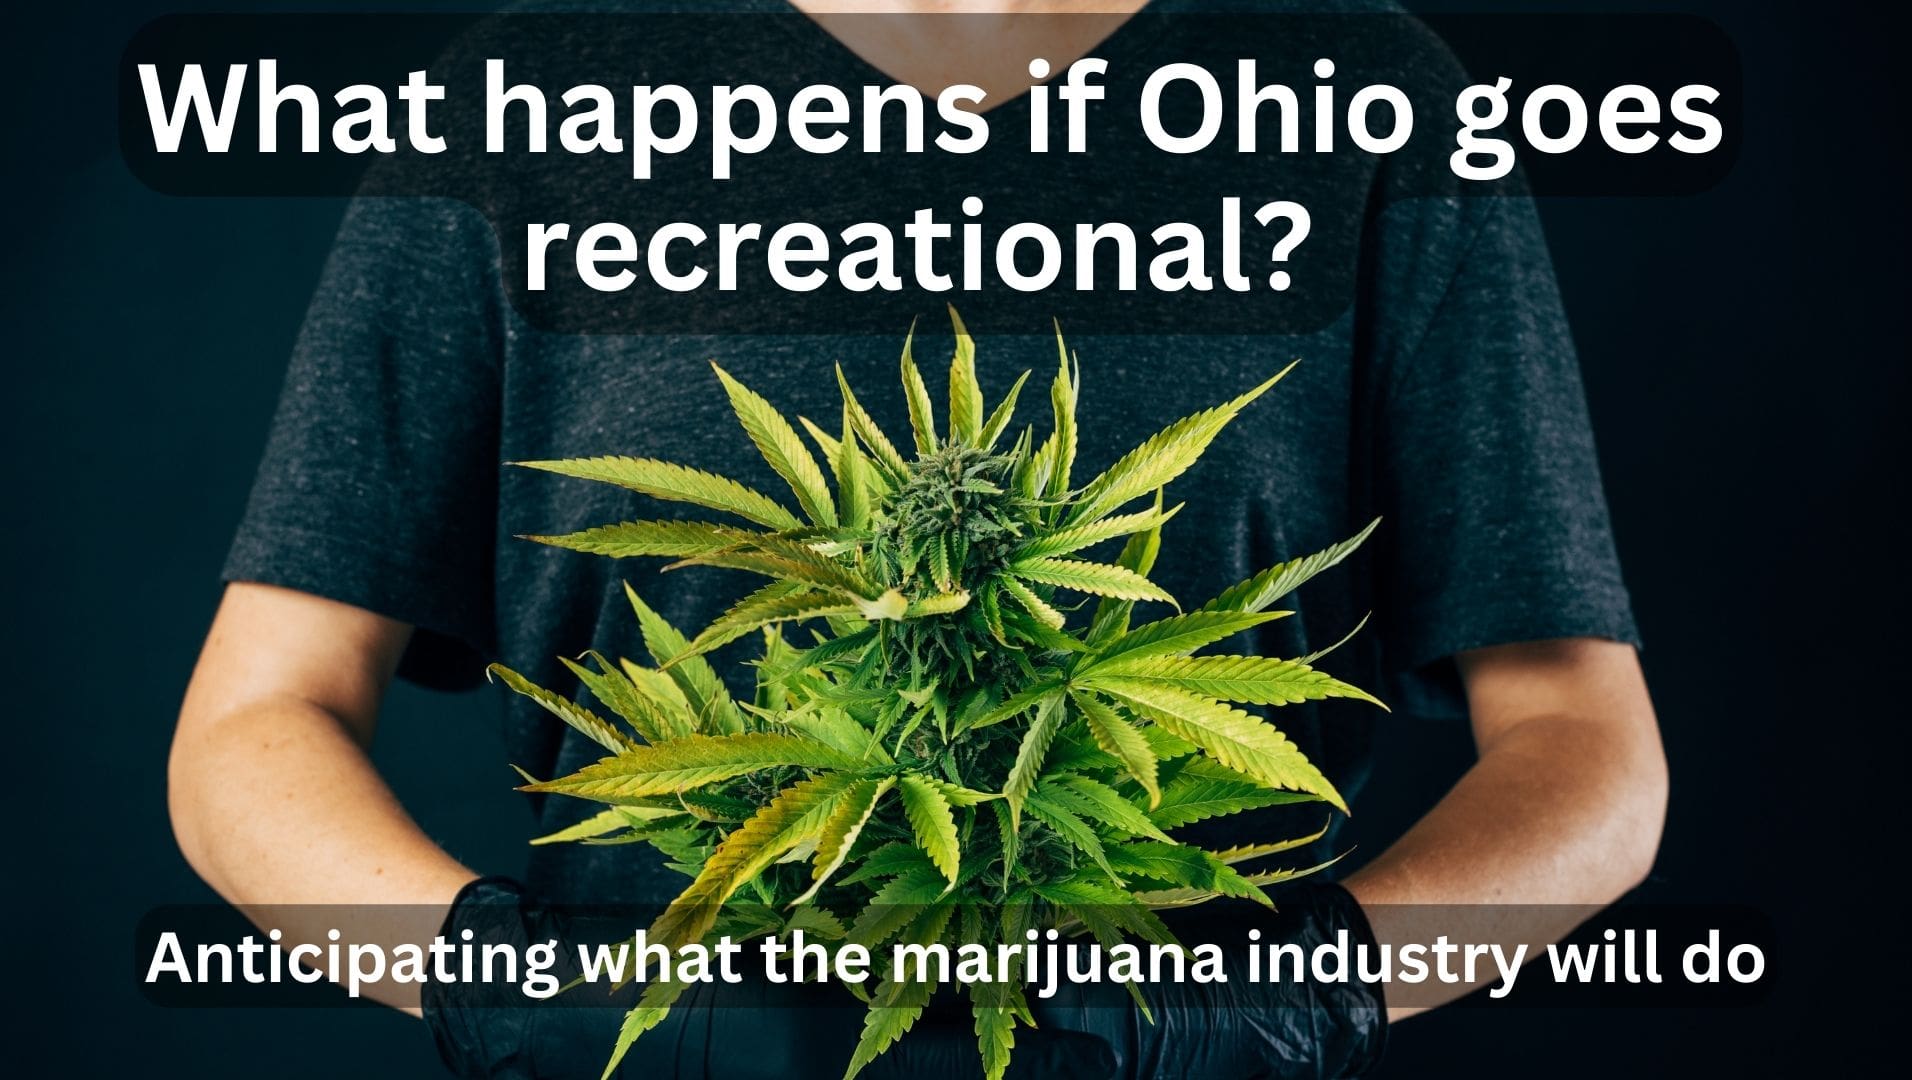 Ohio's Marijuana Industry